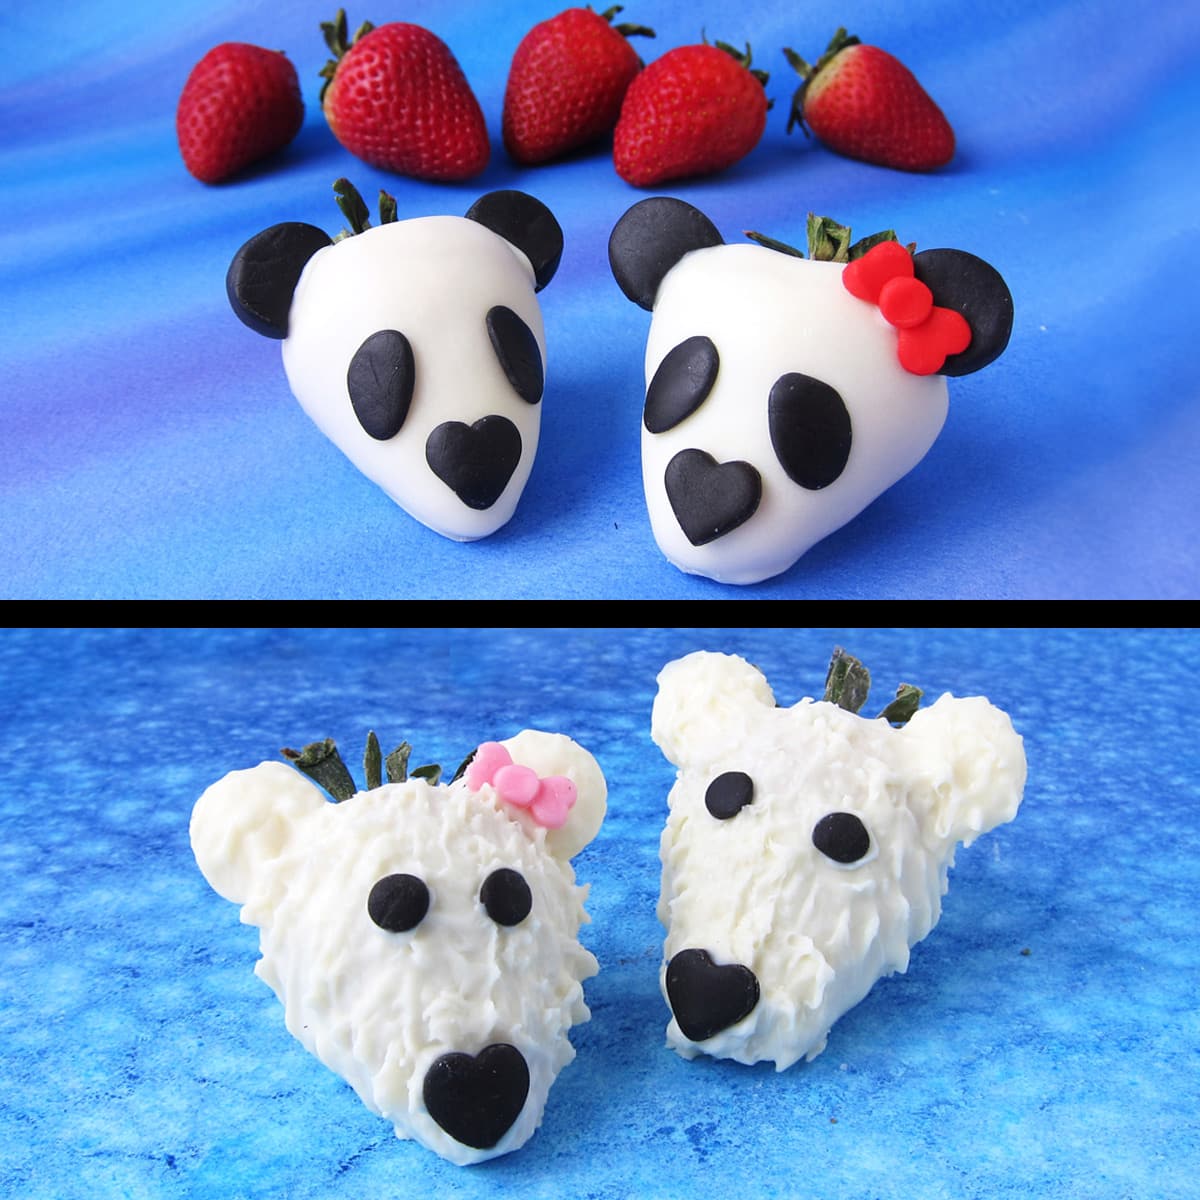 white chocolate-dipped strawberries decorated like pandas and polar bears.